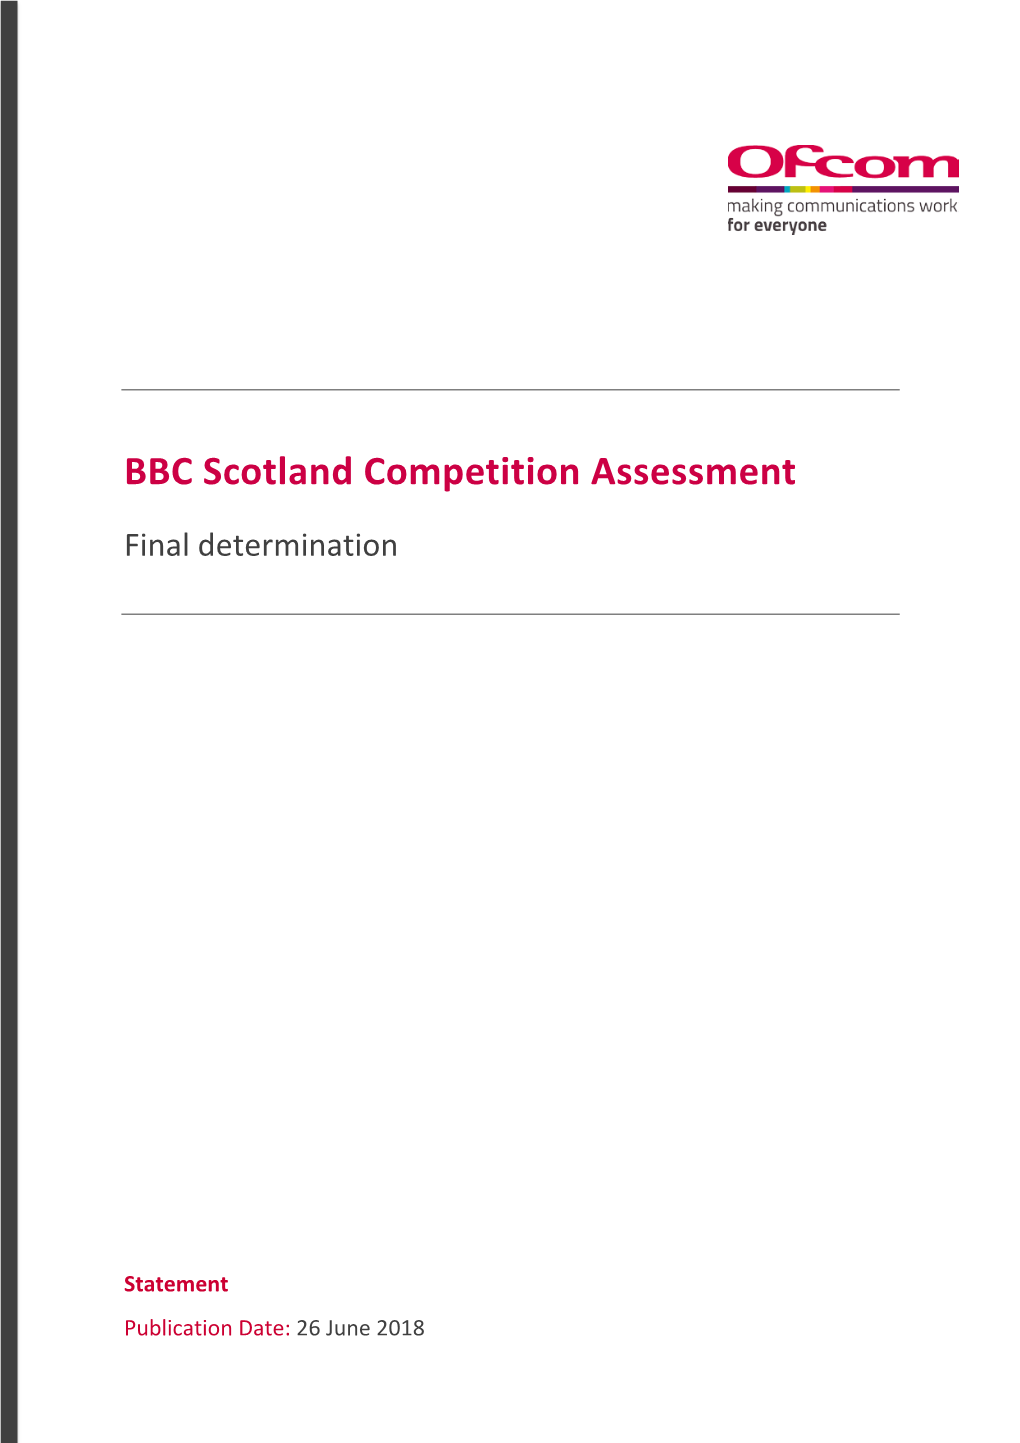 BBC Scotland Competition Assessment Final Determination